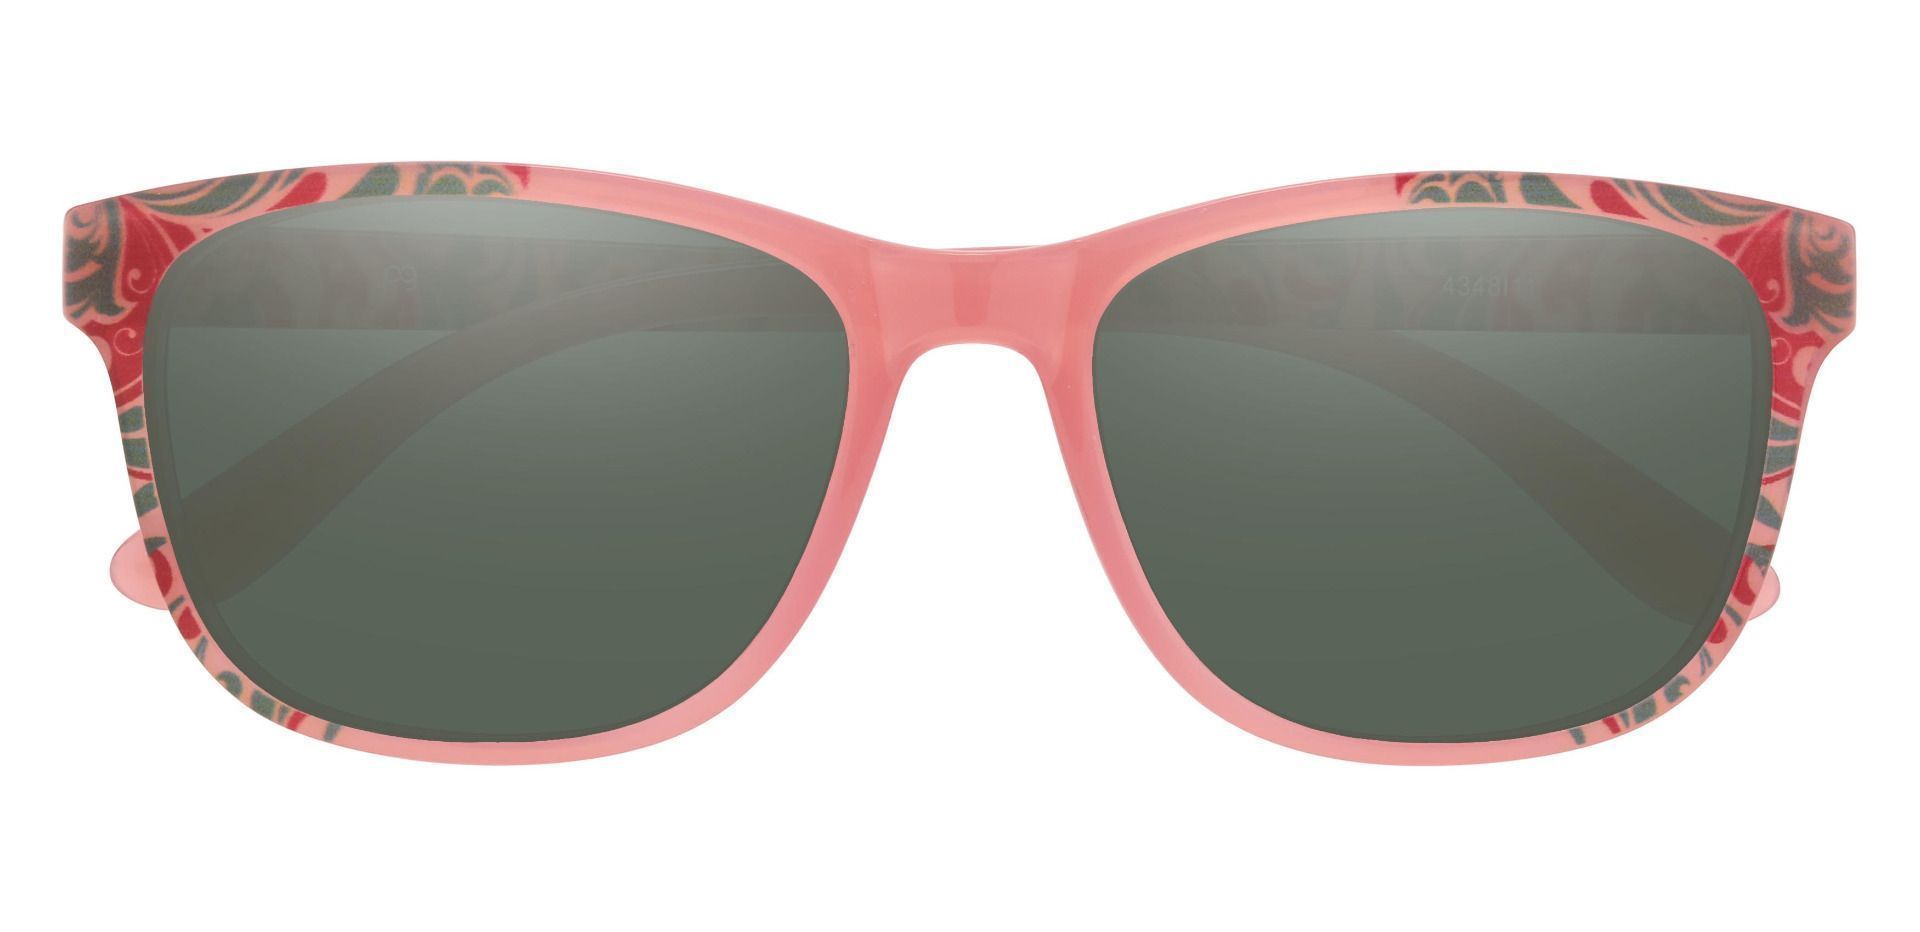 Juliet Square Prescription Sunglasses - Pink Frame With Green Lenses